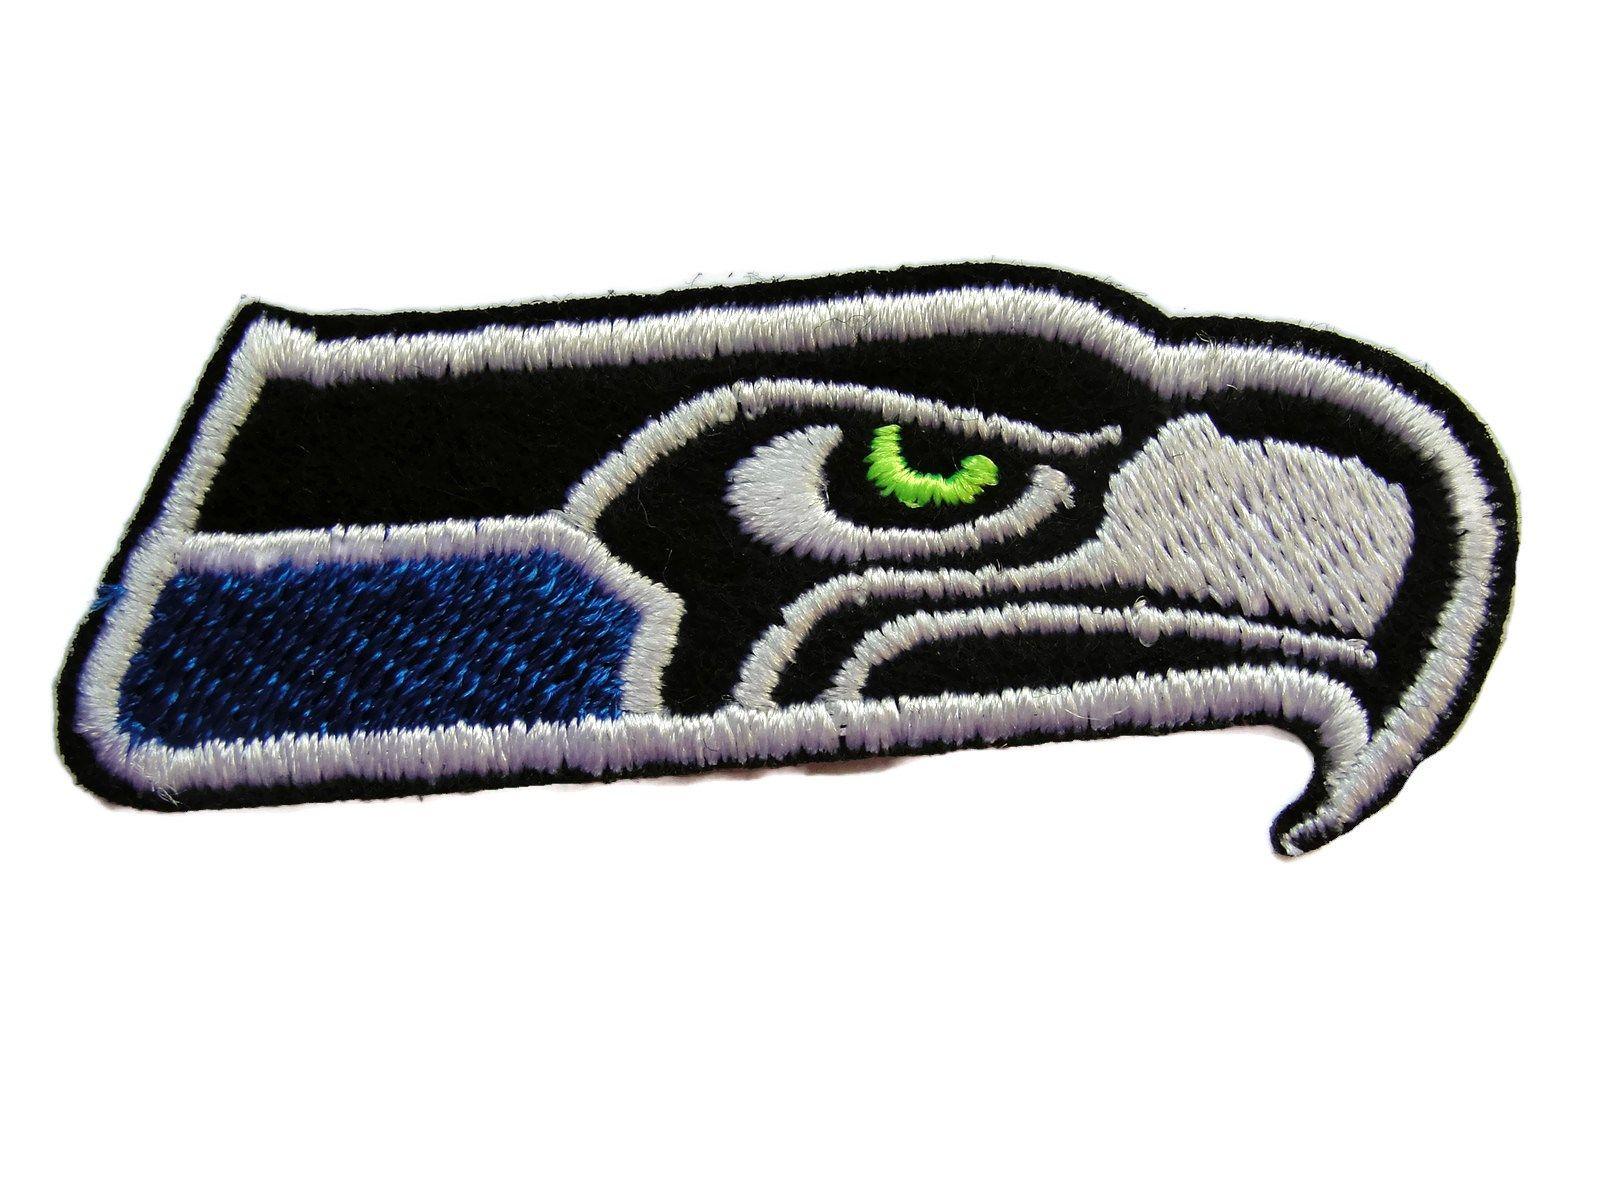 Hawk Head Logo - Hawk Head Stylized Logo Emblem Embroidered Iron On Patch Applique